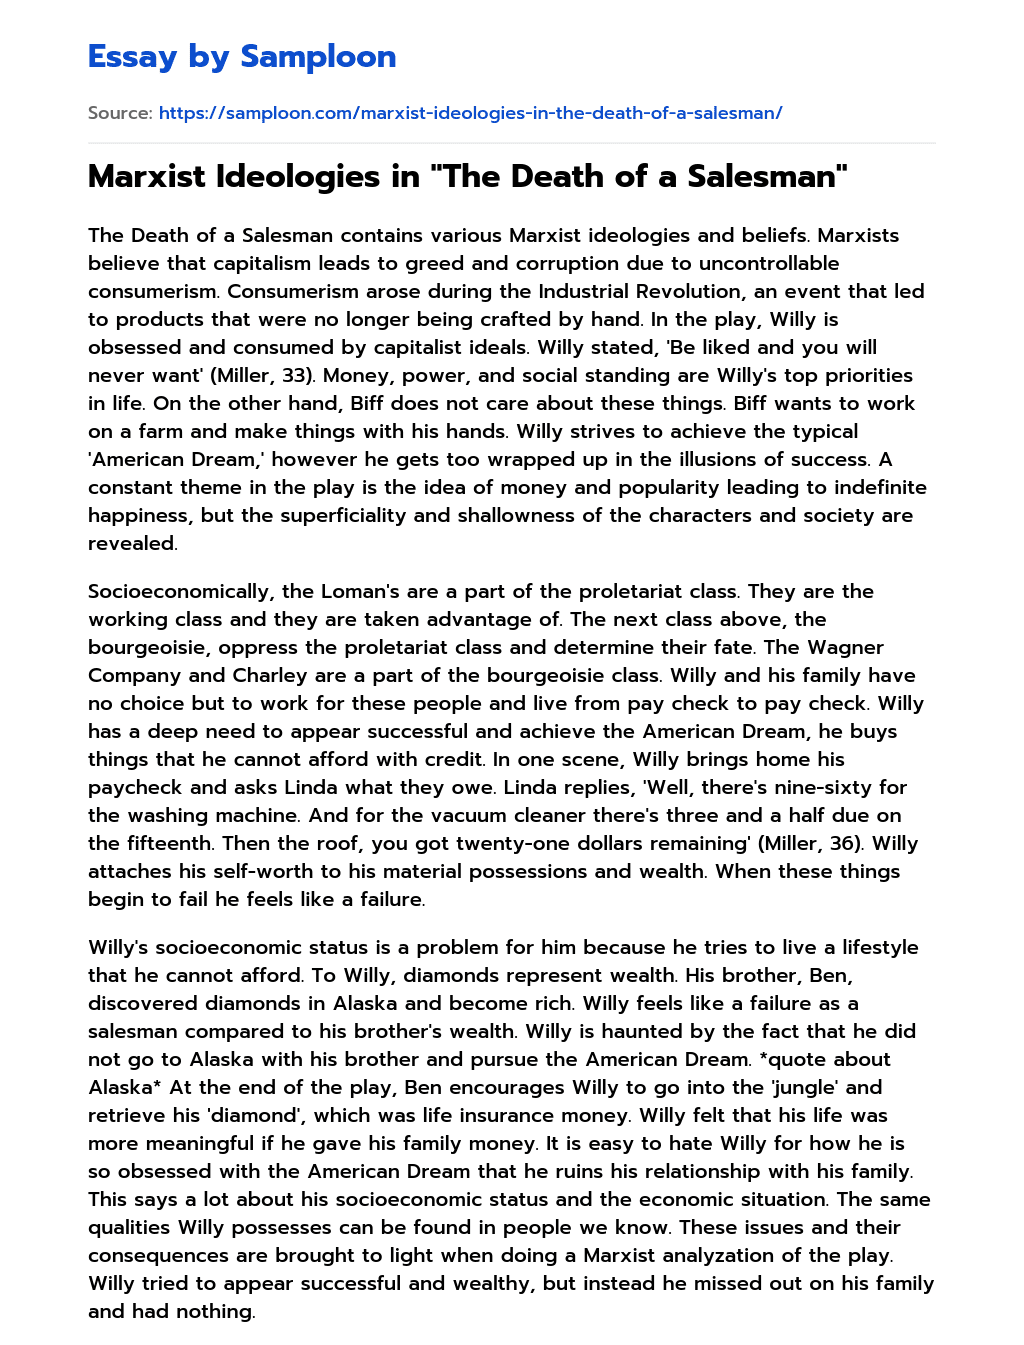 Marxist Ideologies in “The Death of a Salesman” essay